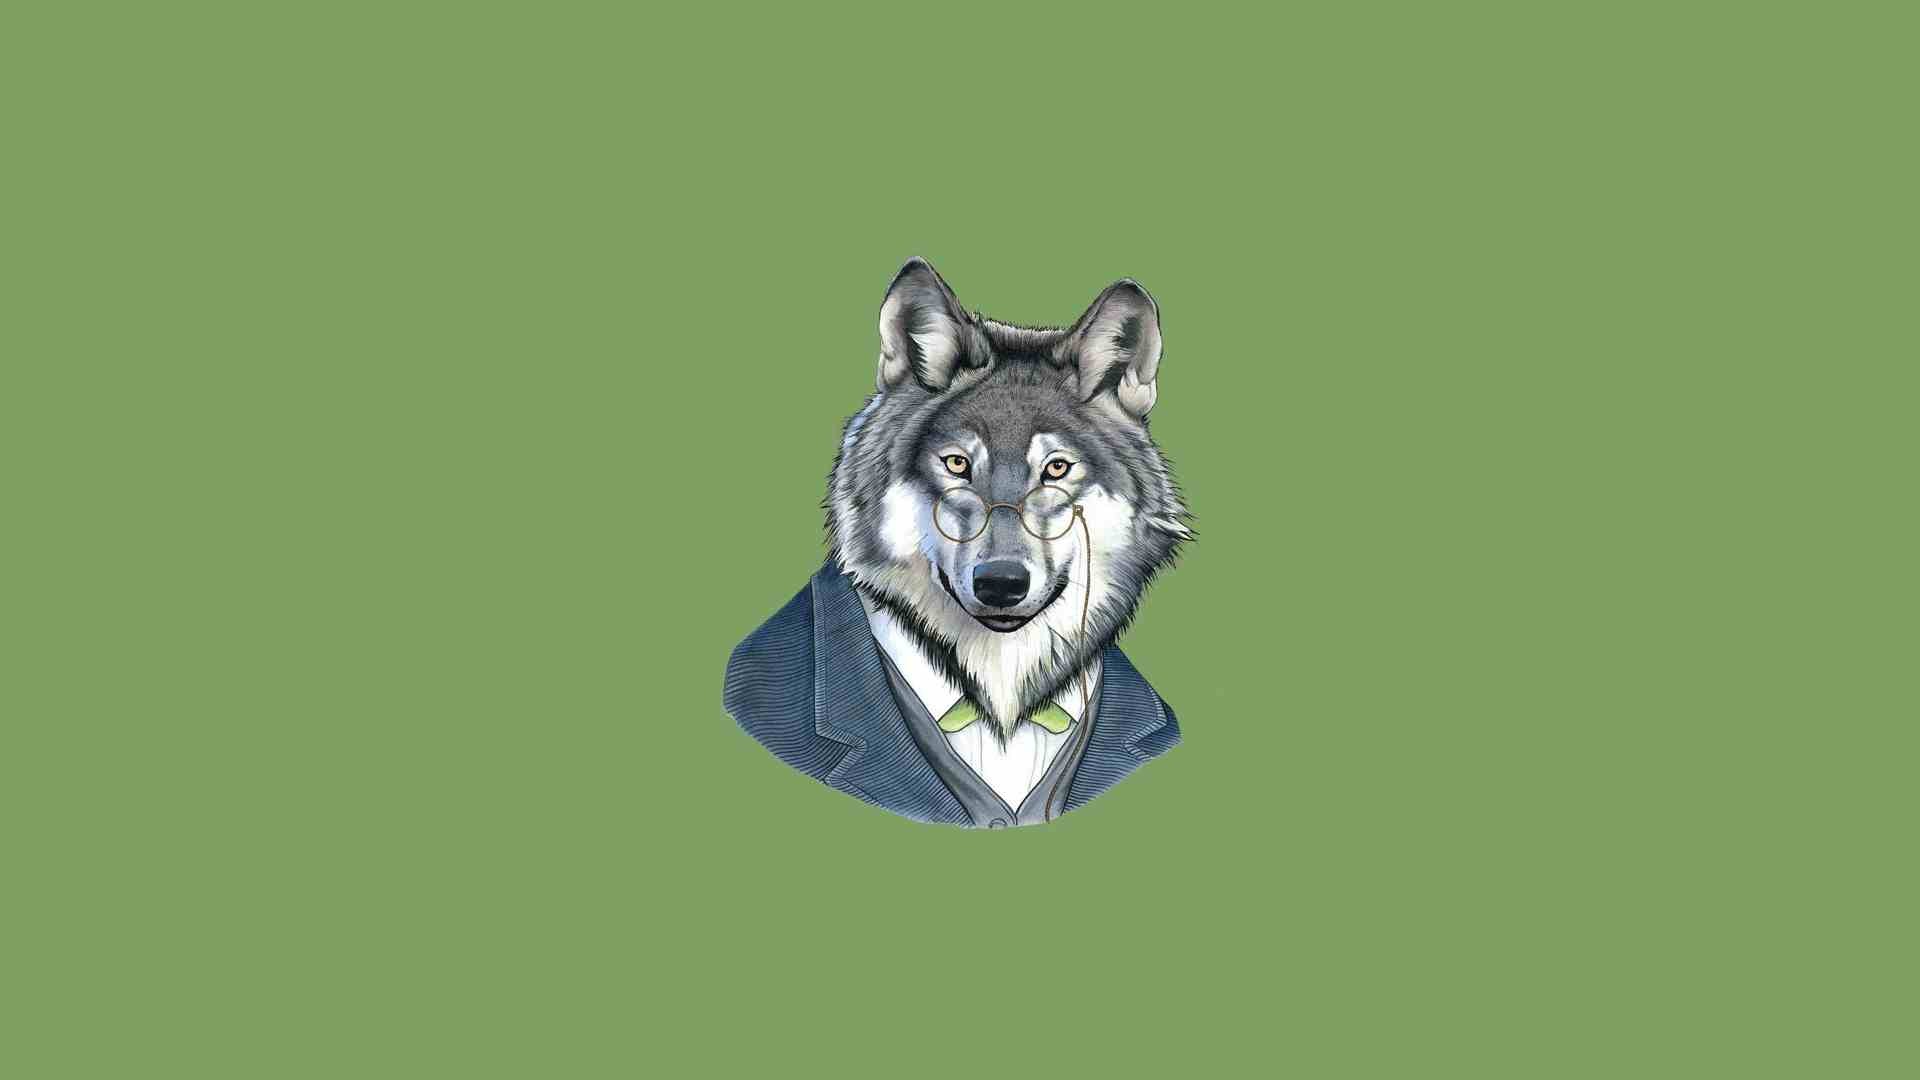 General 1920x1080 minimalism wolf glasses green background green animals mammals simple background artwork